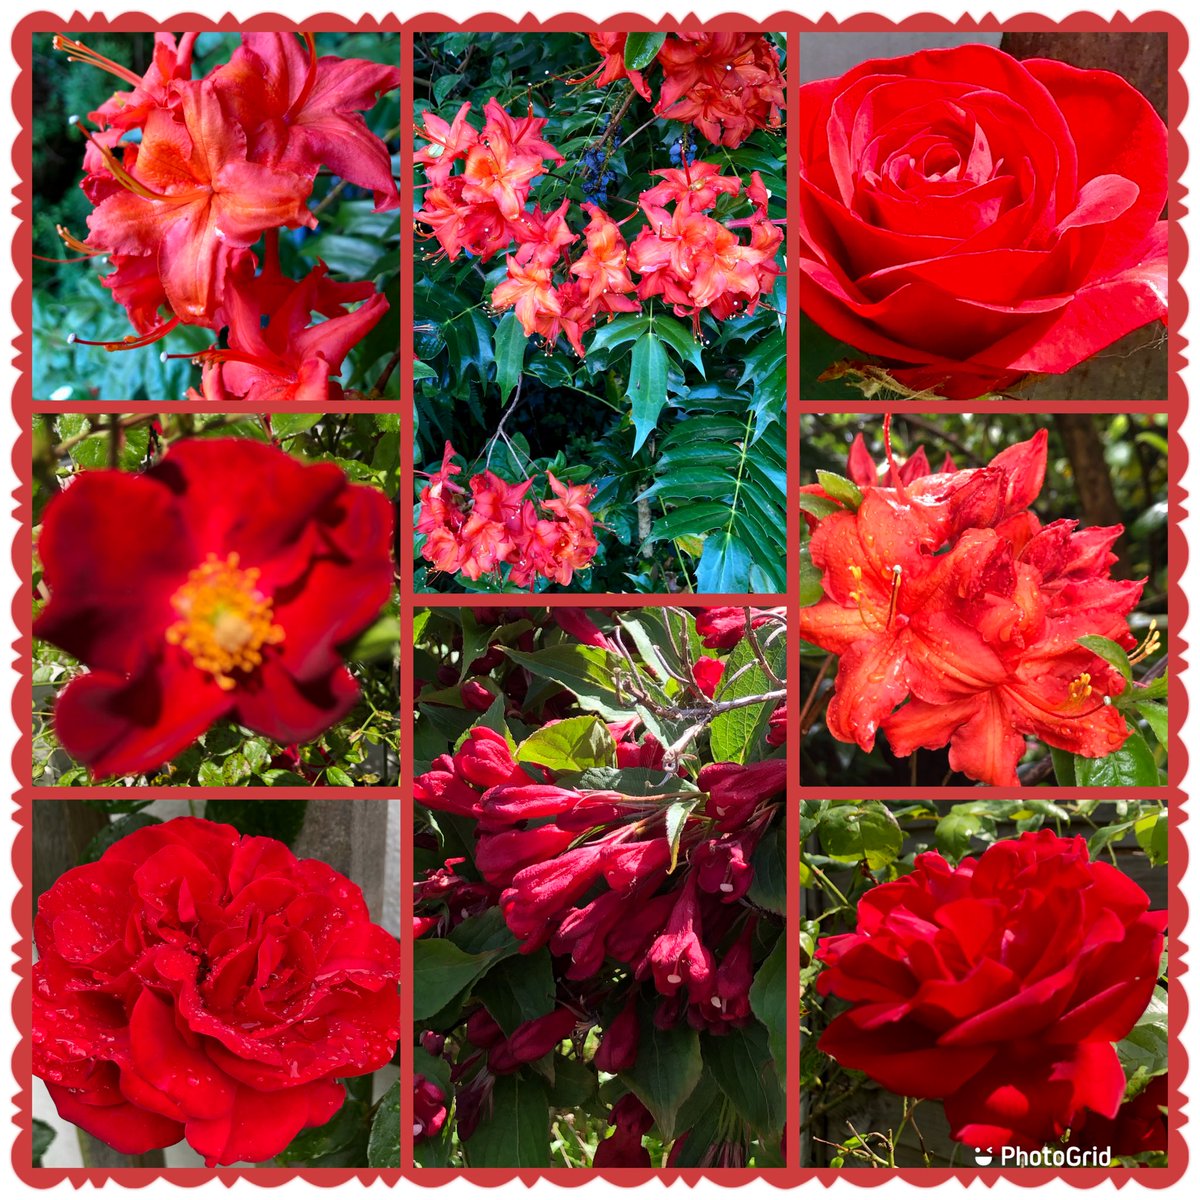 Shades of fiery red in my garden today 🔥♥️❤️#FlowersOnFriday #Red #MyGarden #Gardening #Colour #FridayVibes #Fiery #BrightColour